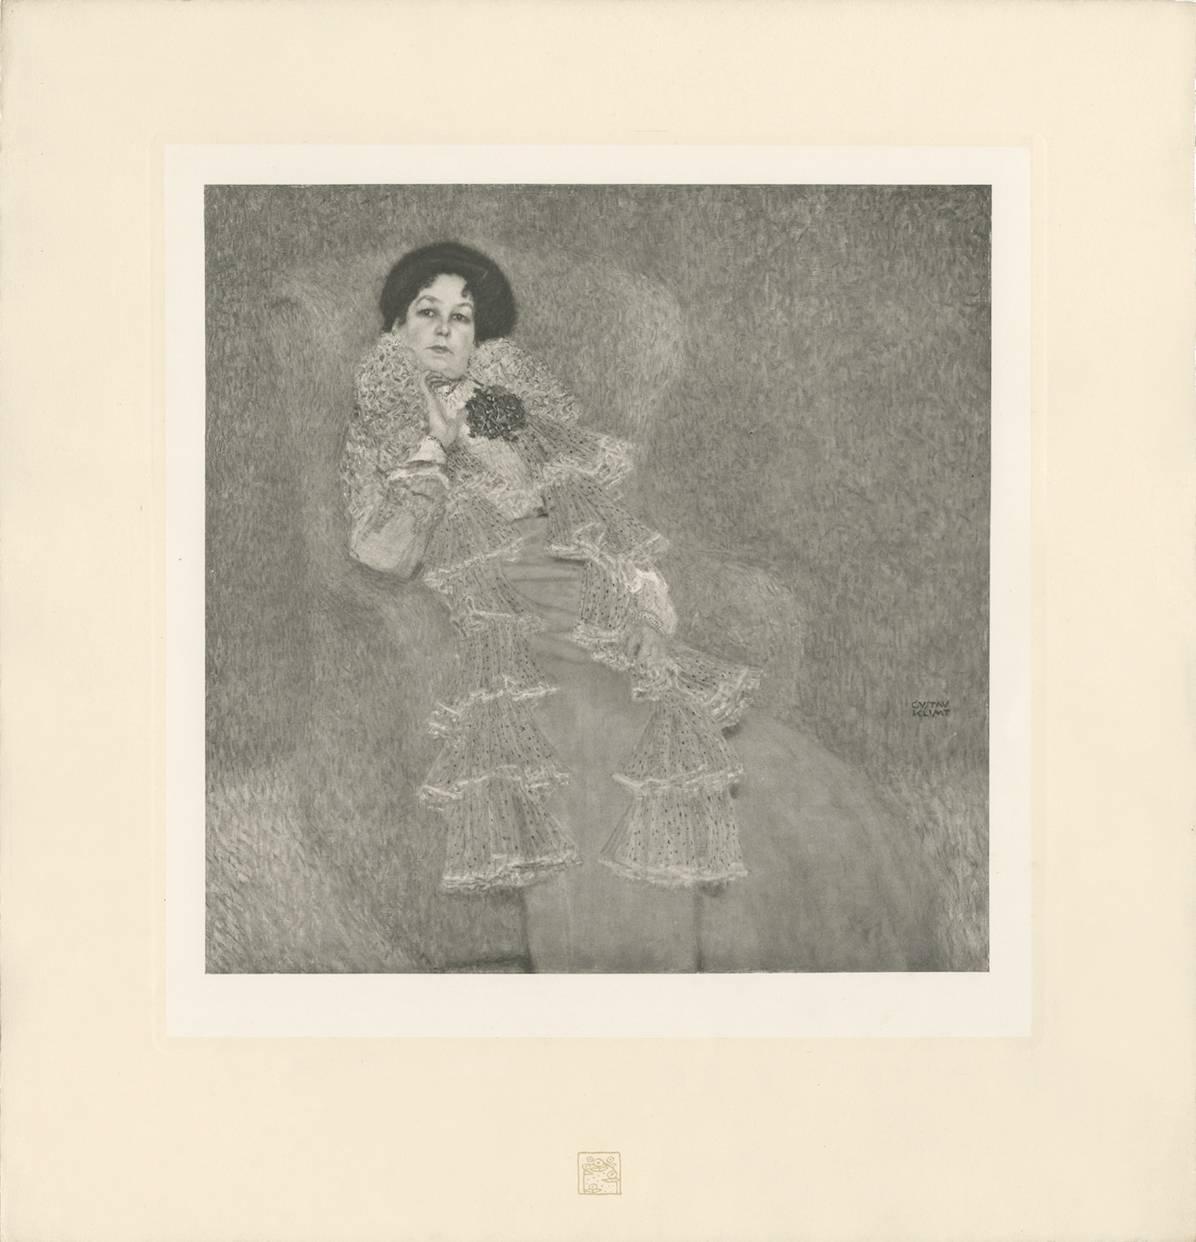 H.O. Miethke Das Werk folio "Portrait of Marie Henneberg" collotype print